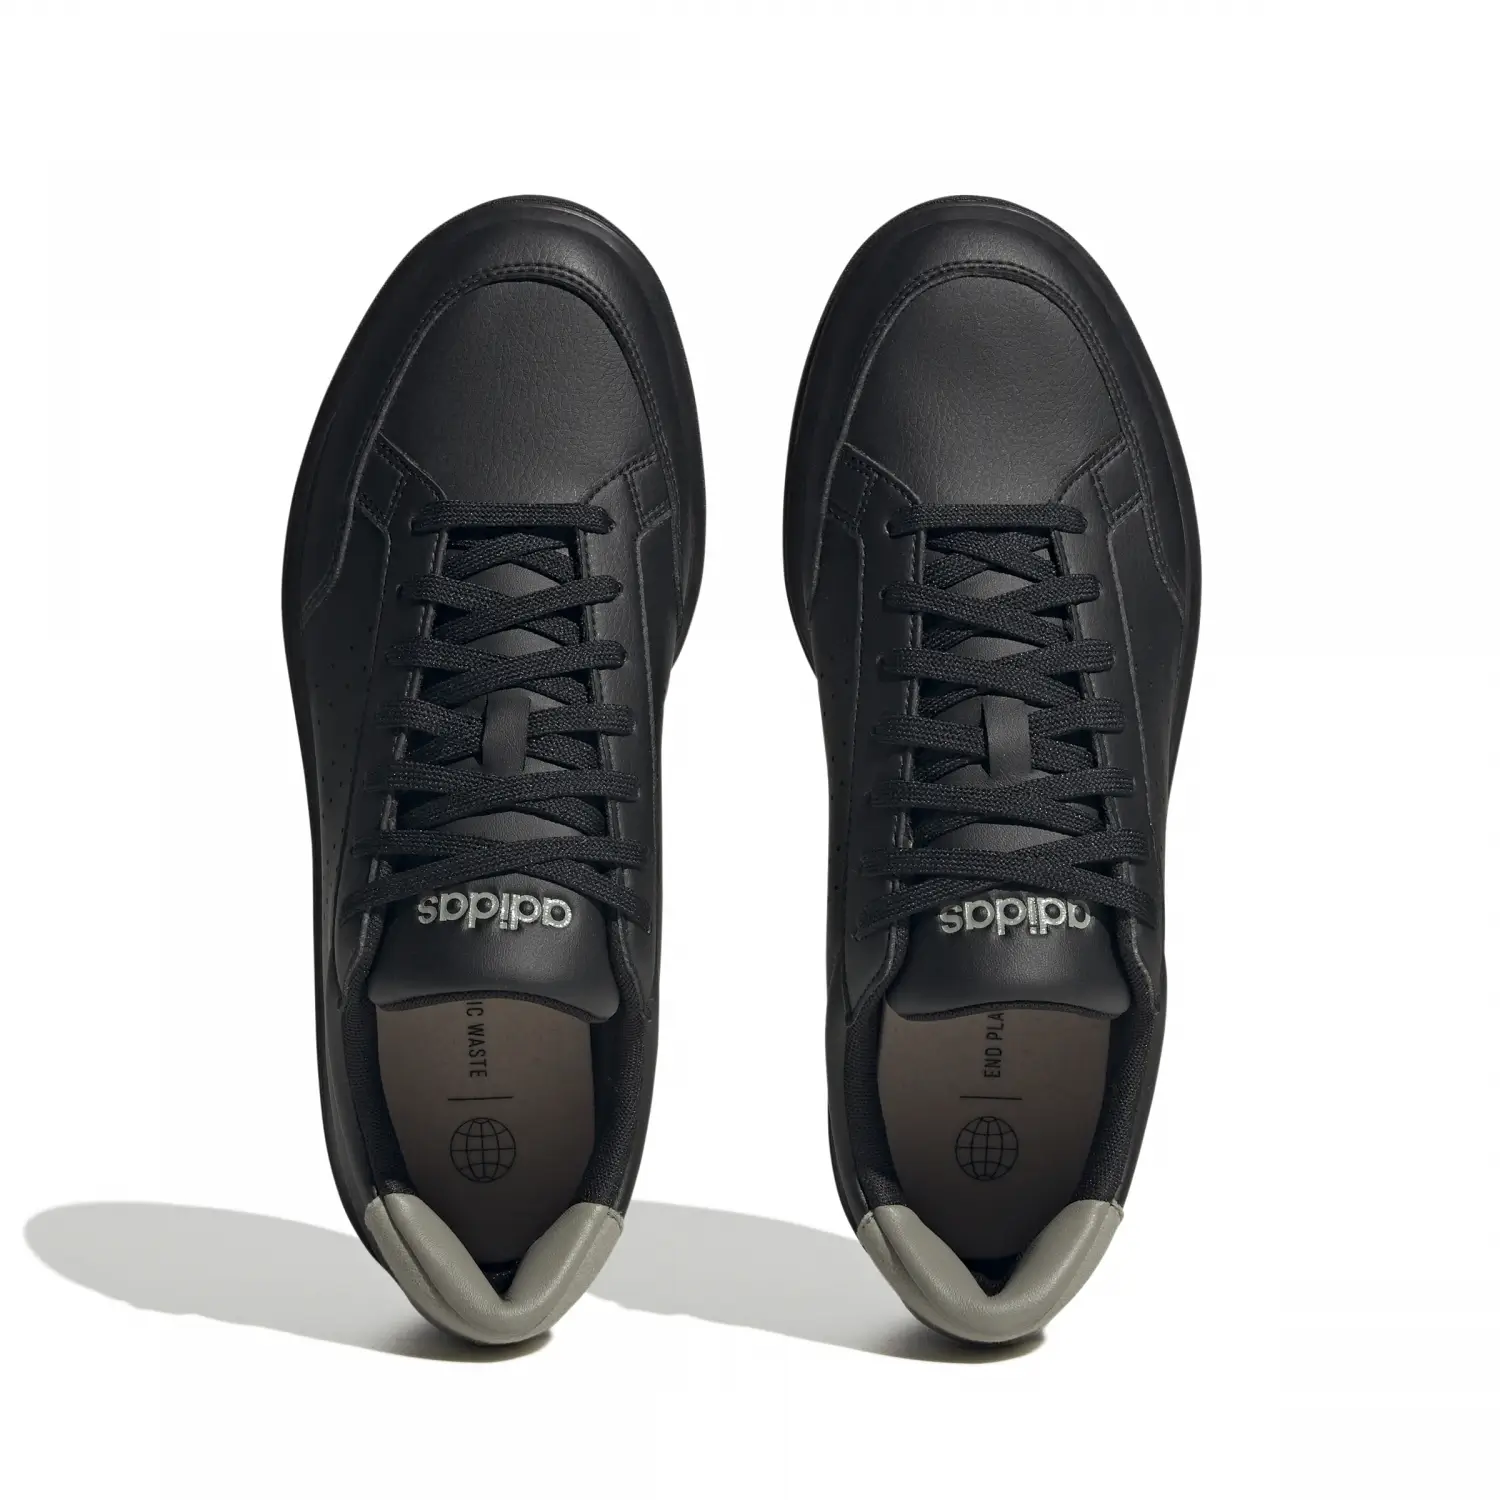 adidas Nova Court Siyah Erkek Günlük Ayakkabı H06235